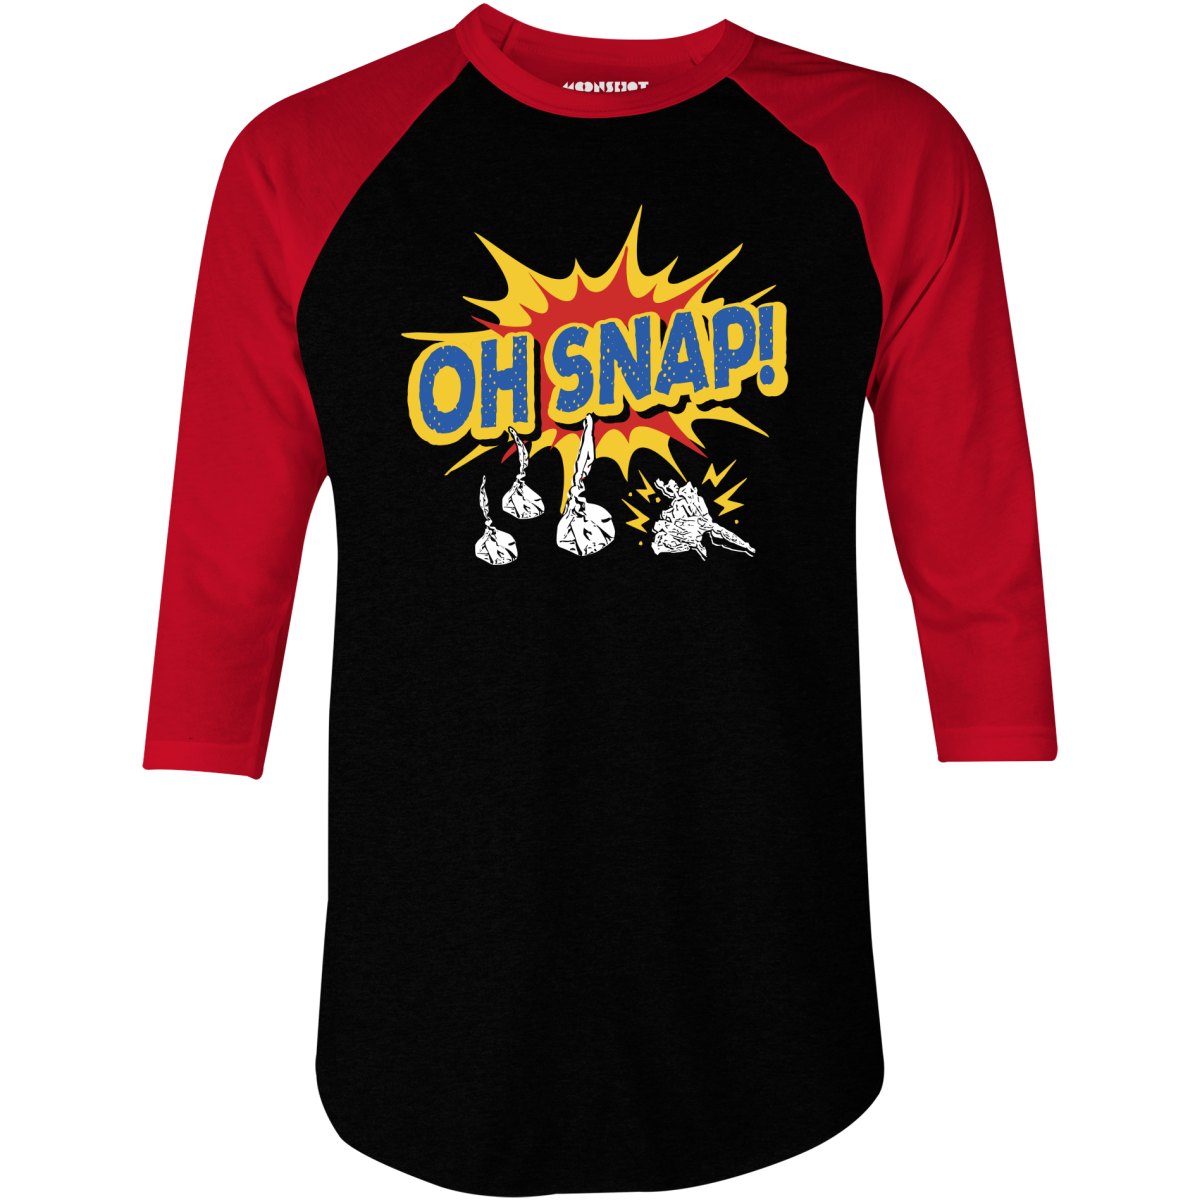 Oh Snap! - 3/4 Sleeve Raglan T-Shirt